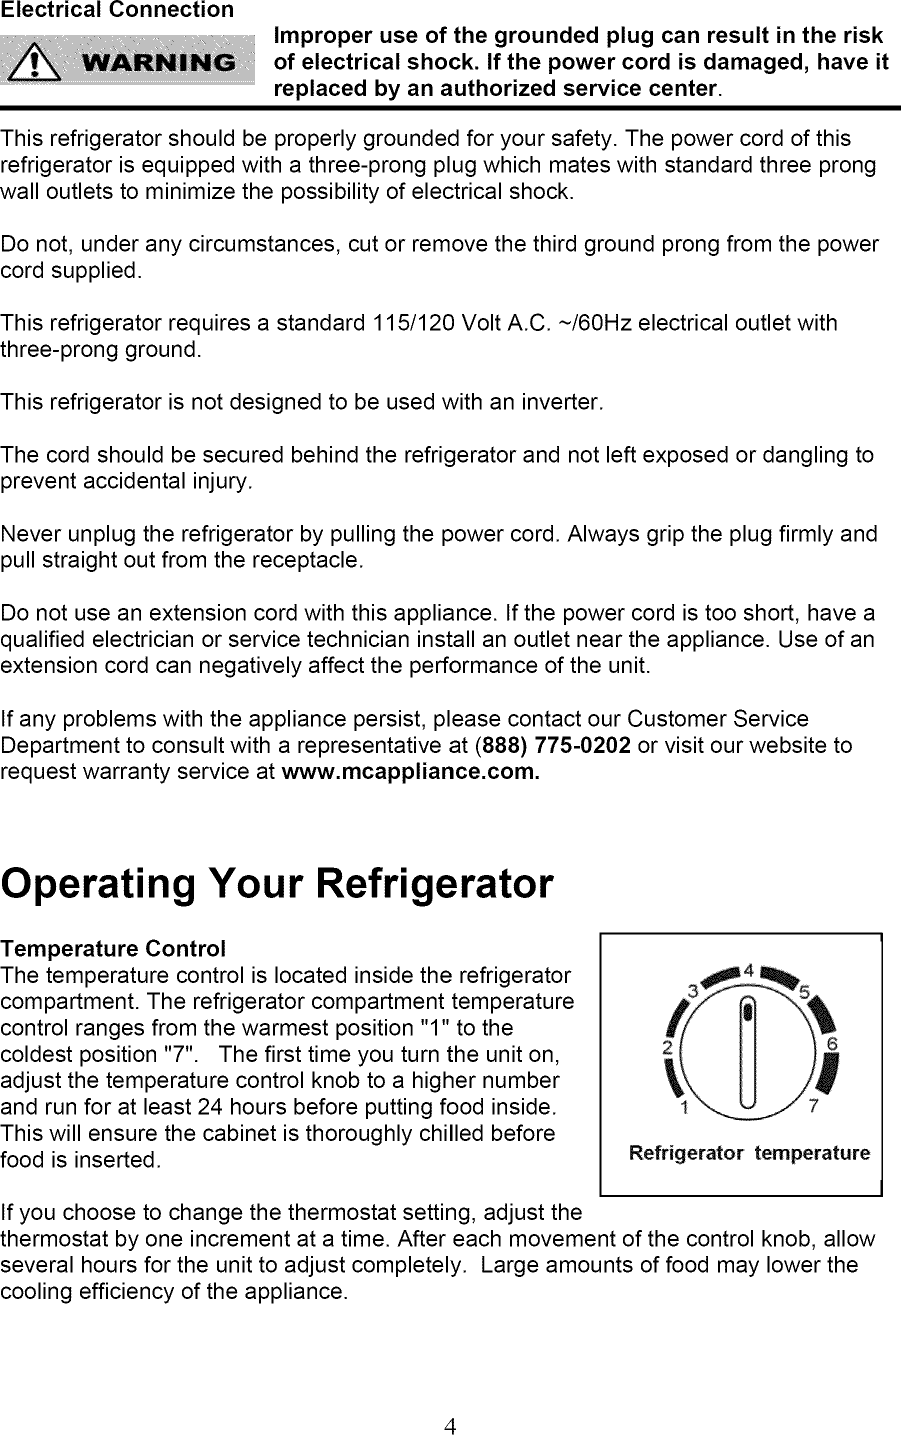 Page 4 of 10 - VISSANI  Refrigerator Compact Manual L0910202